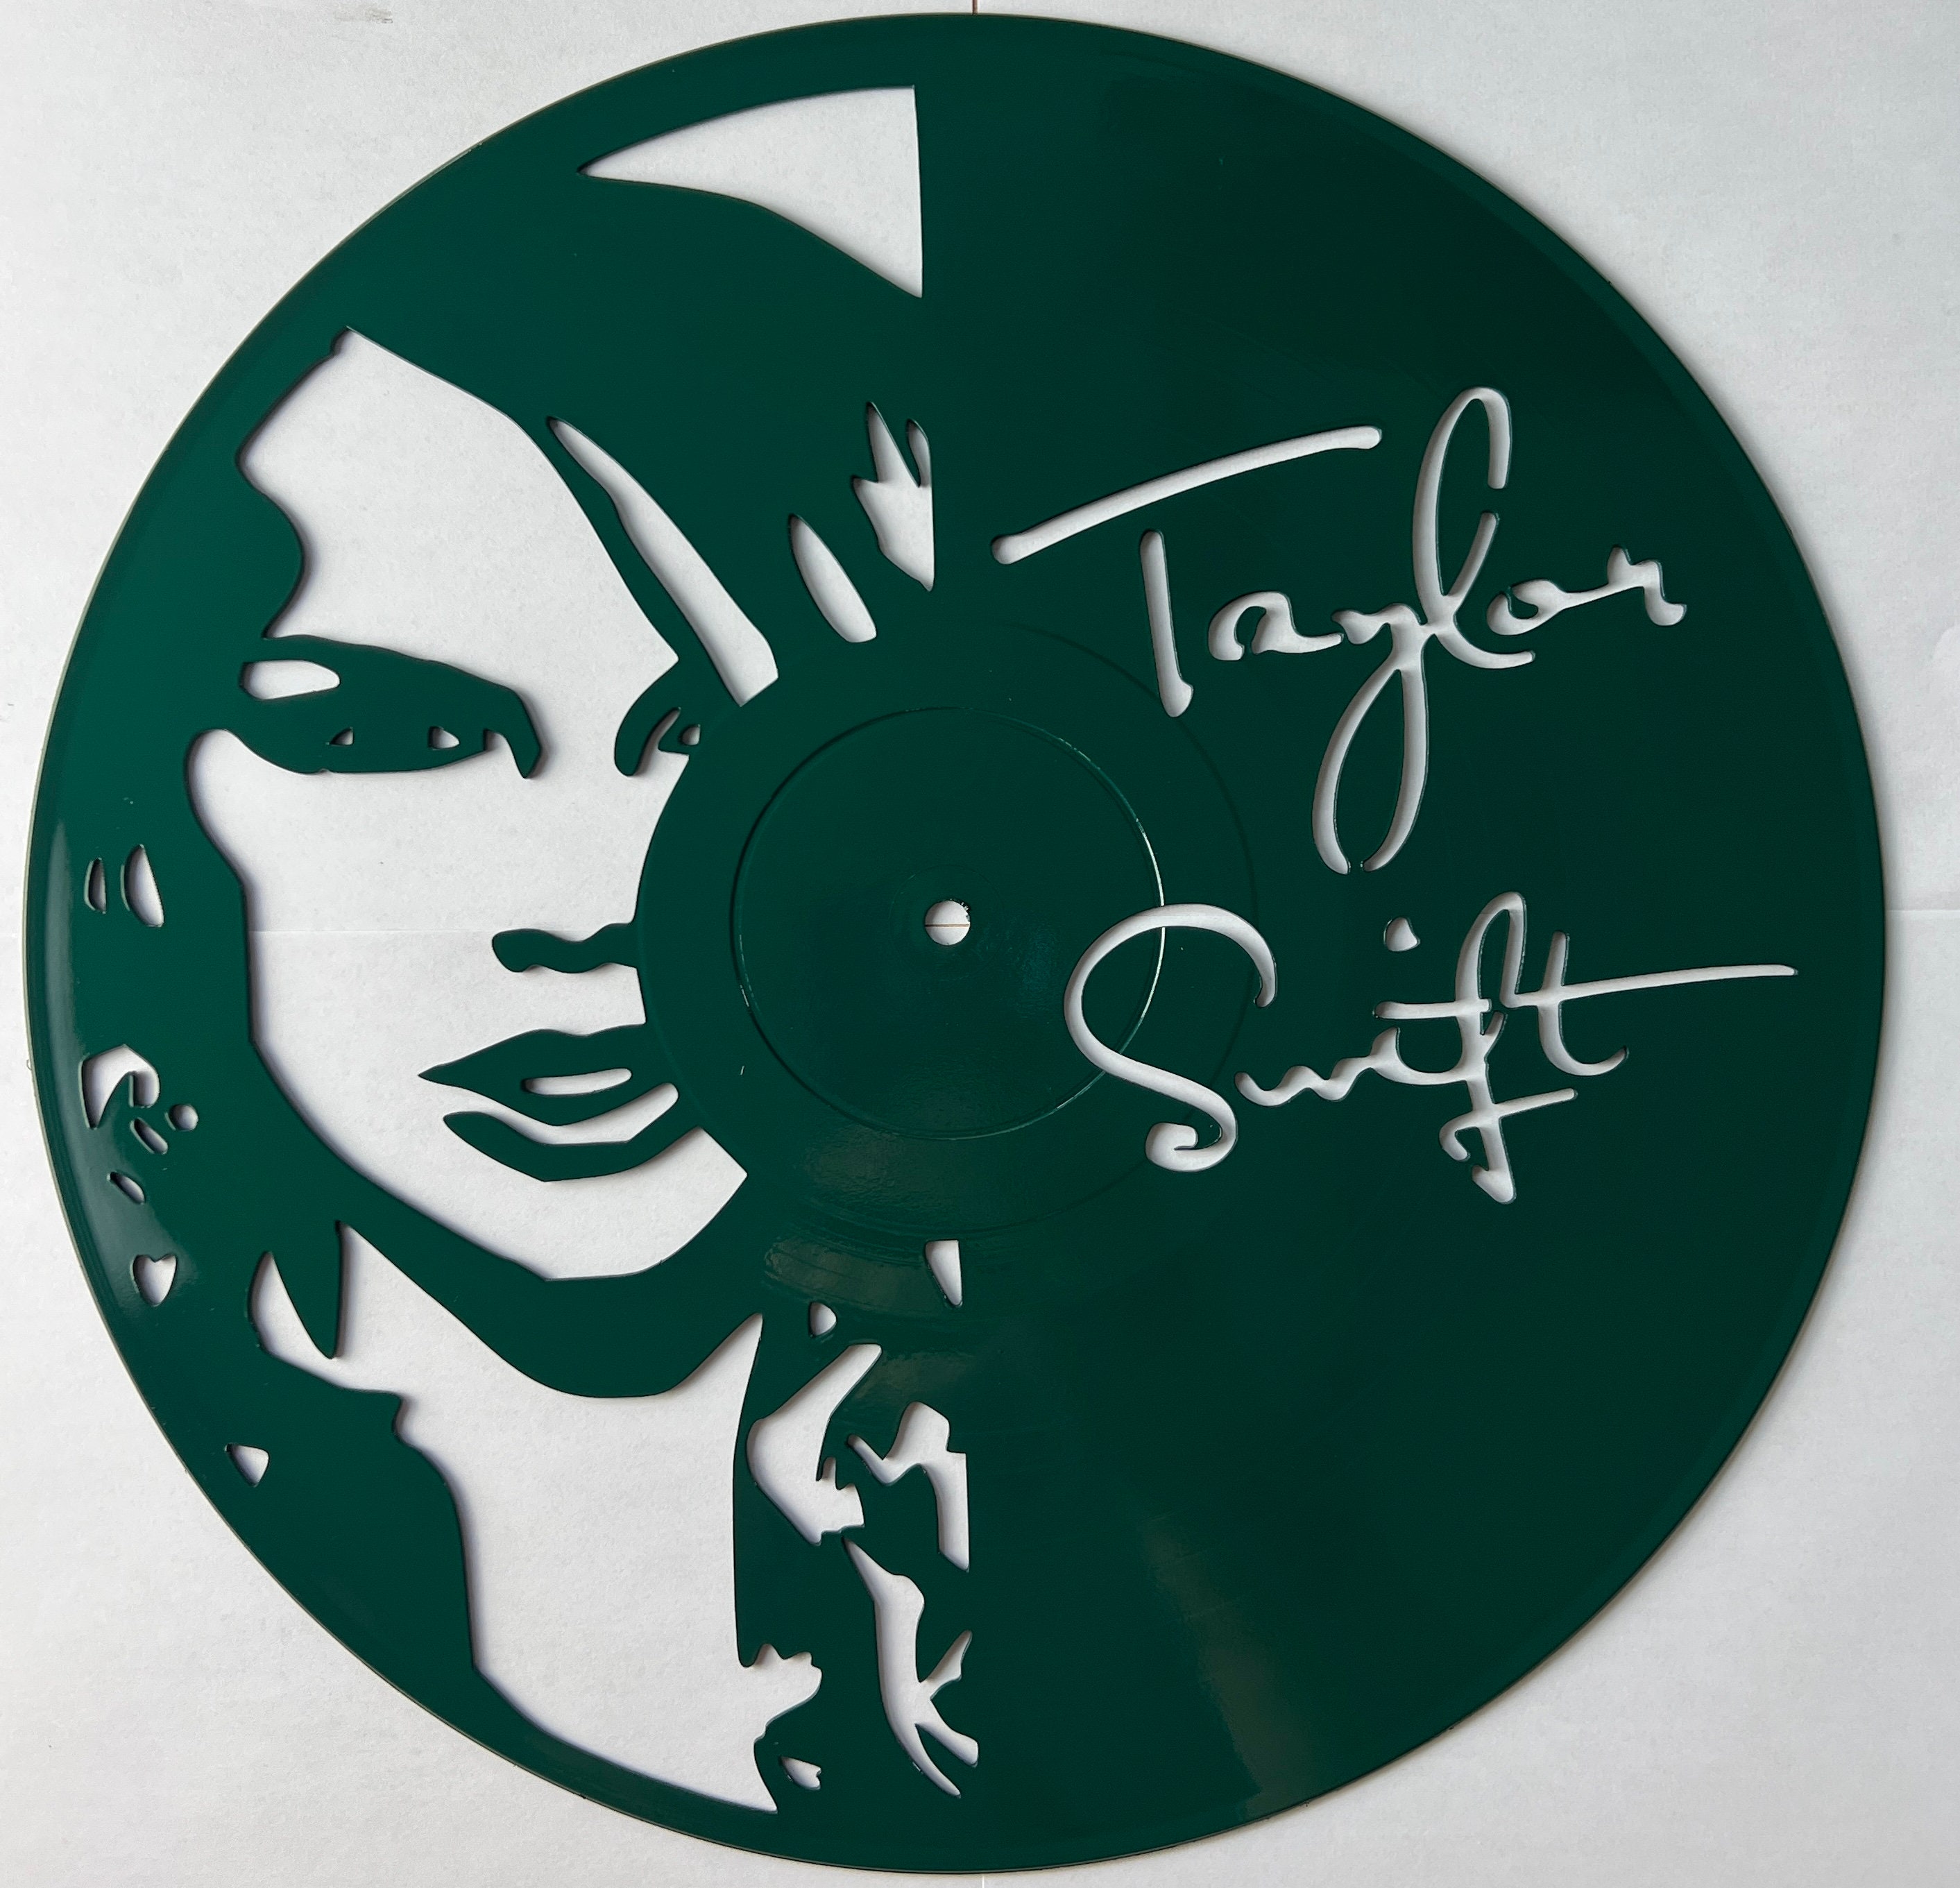 Evermore Vinyl - Taylor Swift, Hobbies & Toys, Music & Media